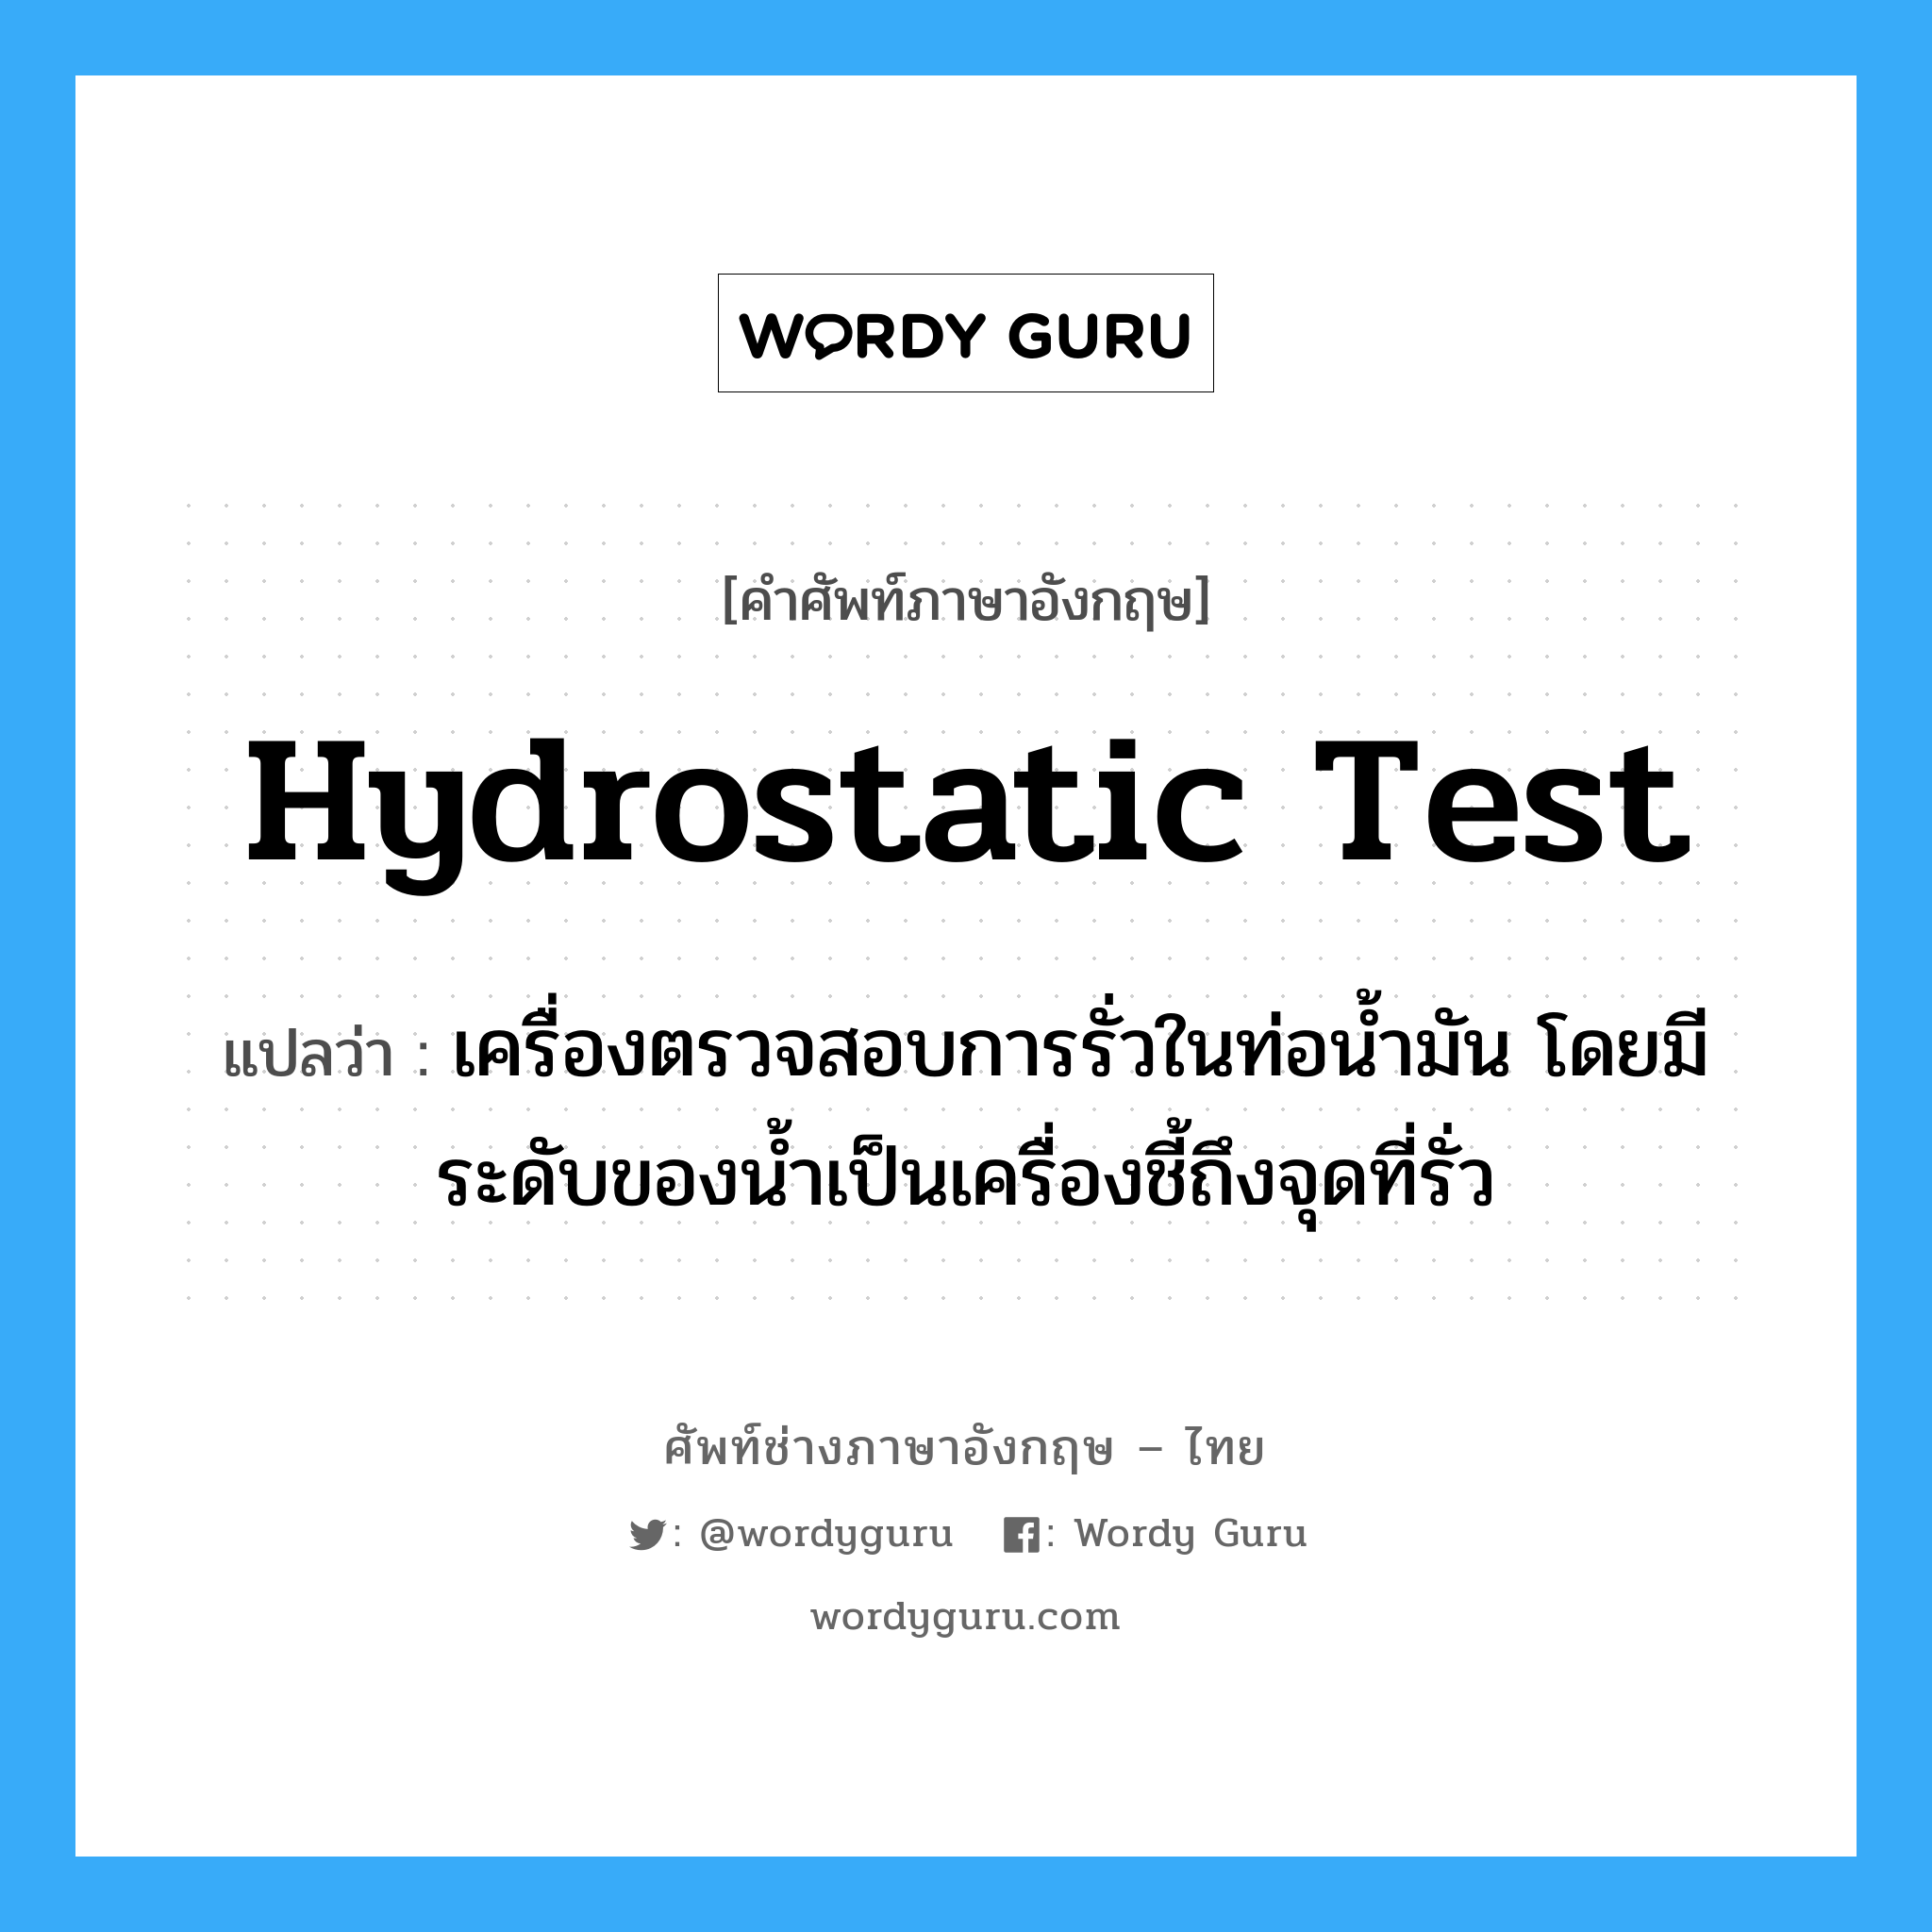 hydrostatic test แปลว่า?, คำศัพท์ช่างภาษาอังกฤษ - ไทย hydrostatic test คำศัพท์ภาษาอังกฤษ hydrostatic test แปลว่า เครื่องตรวจสอบการรั่วในท่อน้ำมัน โดยมีระดับของน้ำเป็นเครื่องชี้ถึงจุดที่รั่ว